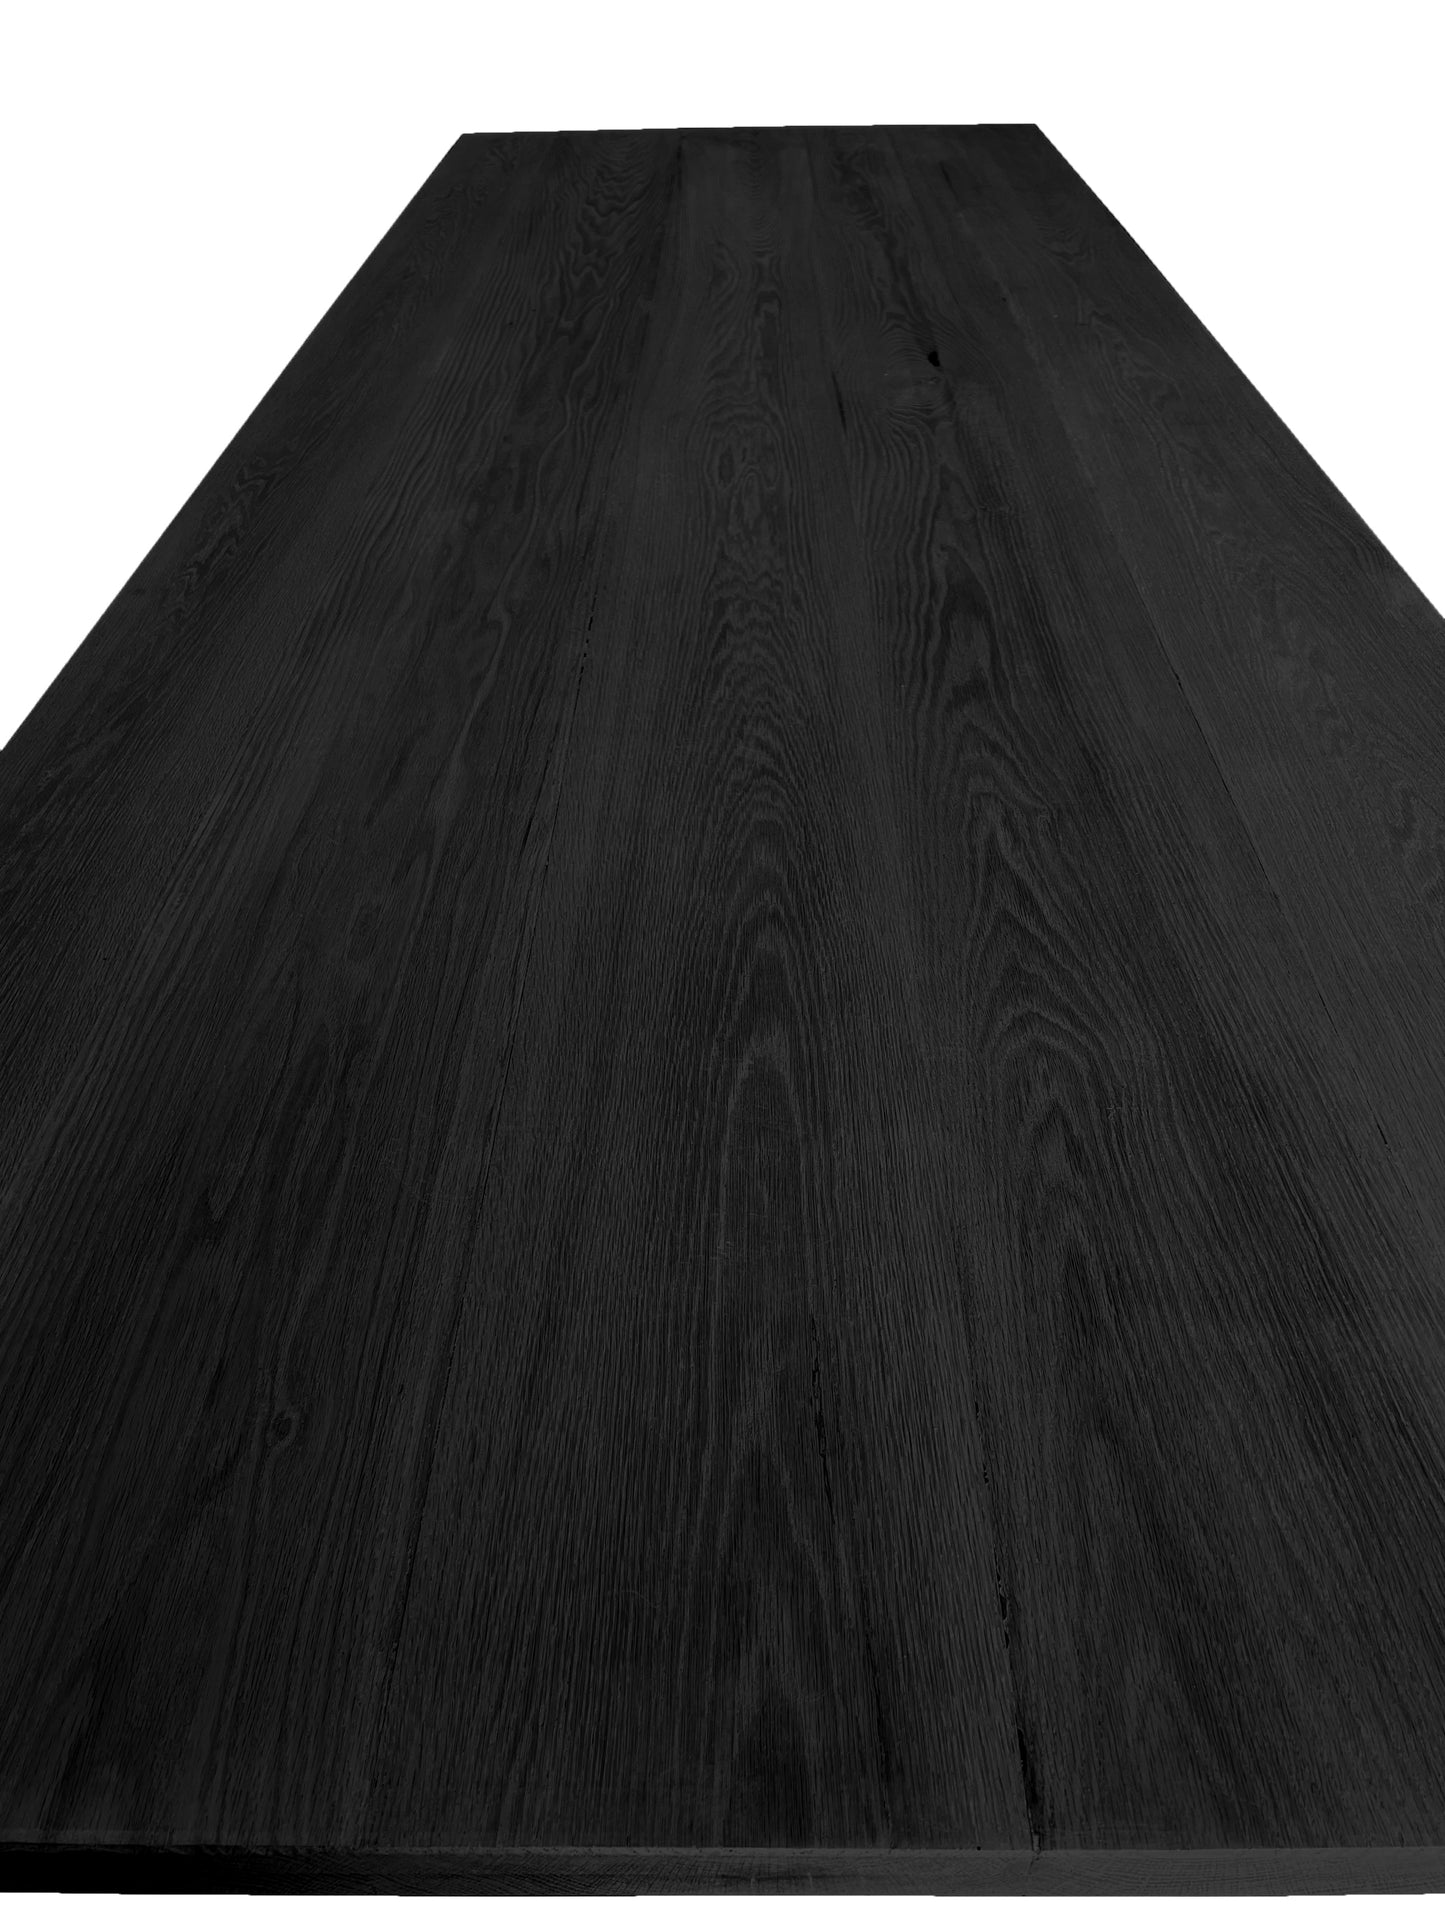 Frais 13- Piece White Oak High Back Black Conference Set